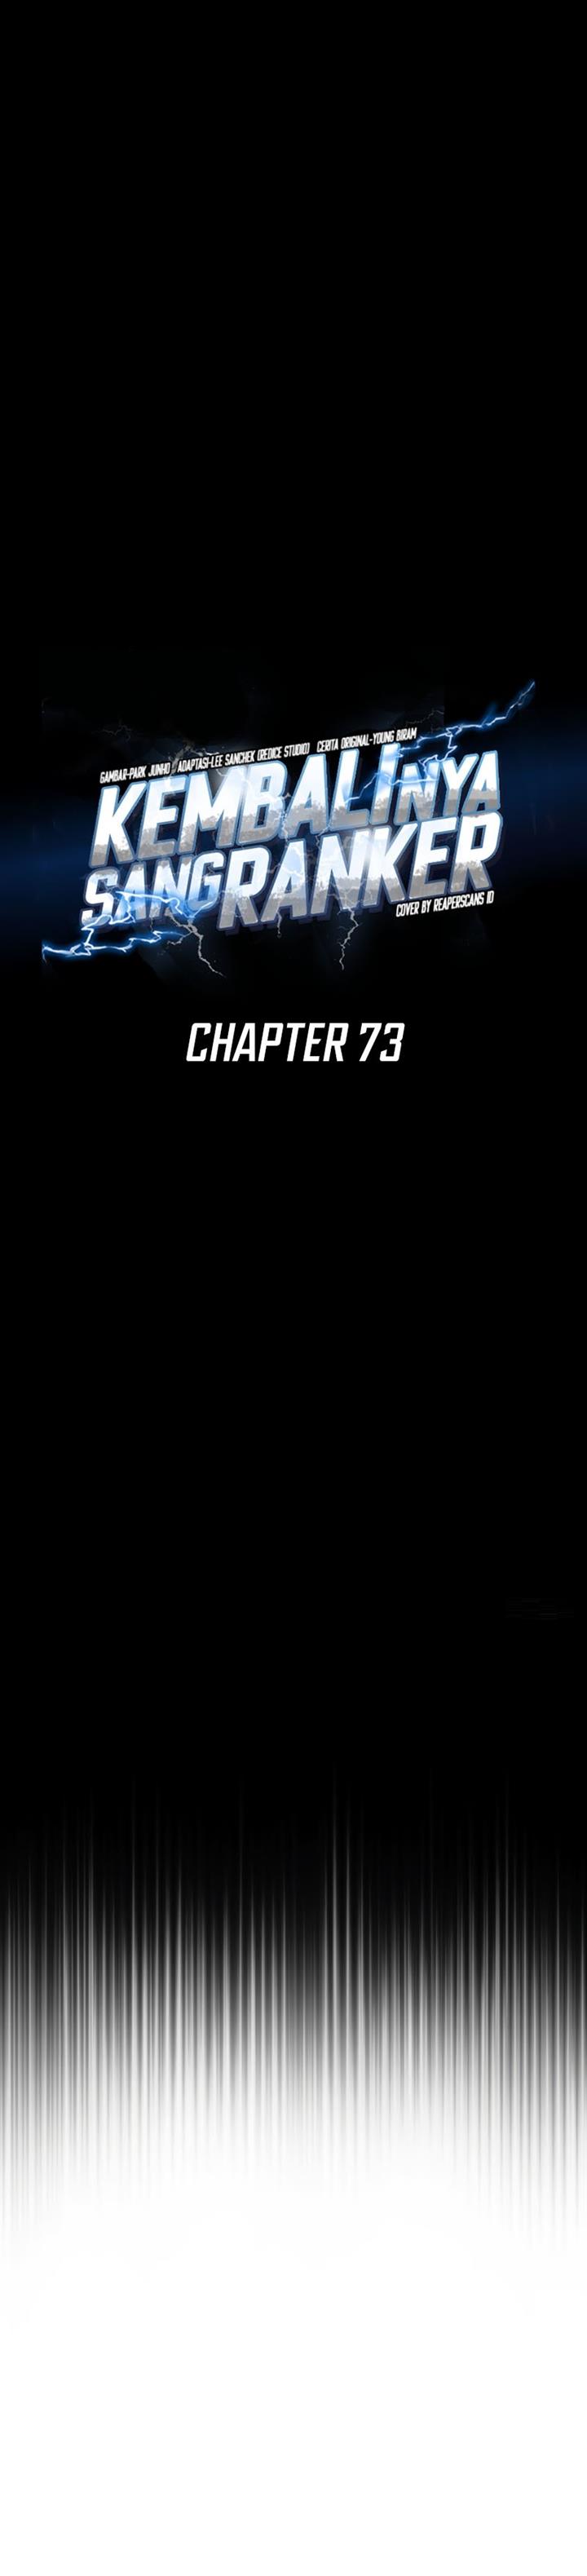 Ranker’s Return (Remake) Chapter 73